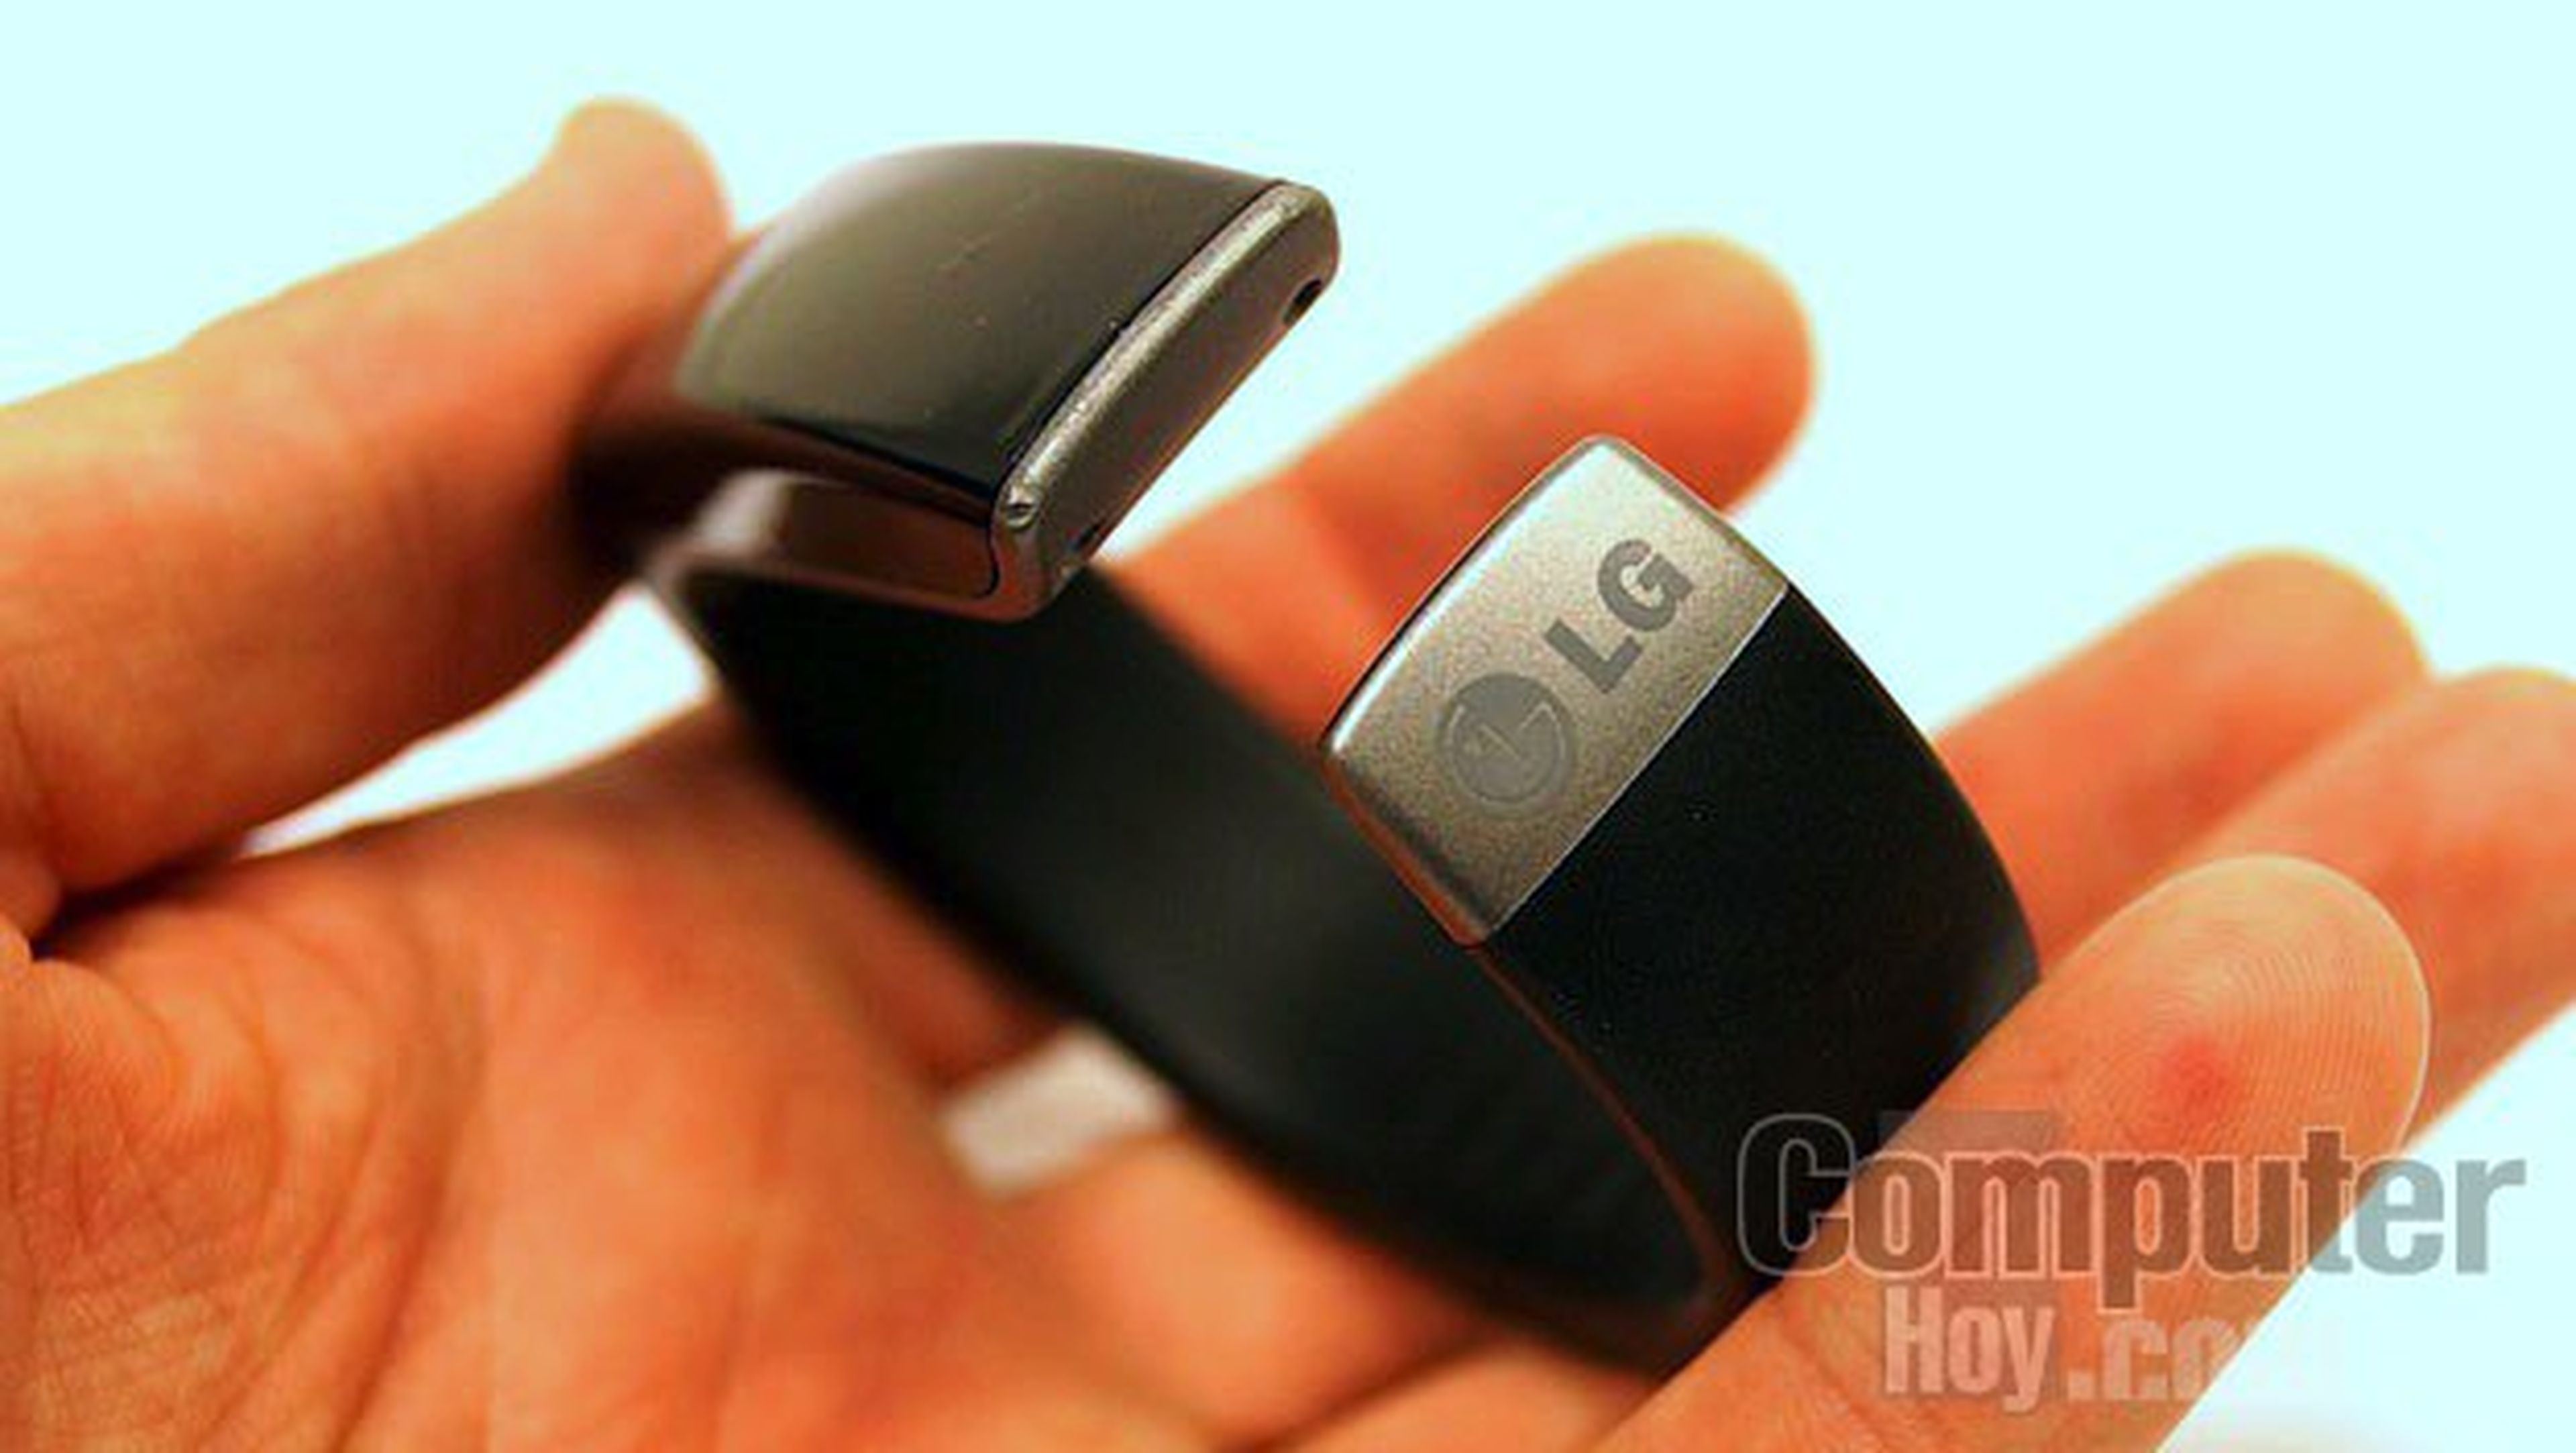 LG Lifeband Touch: análisis de la cuantificadora de LG